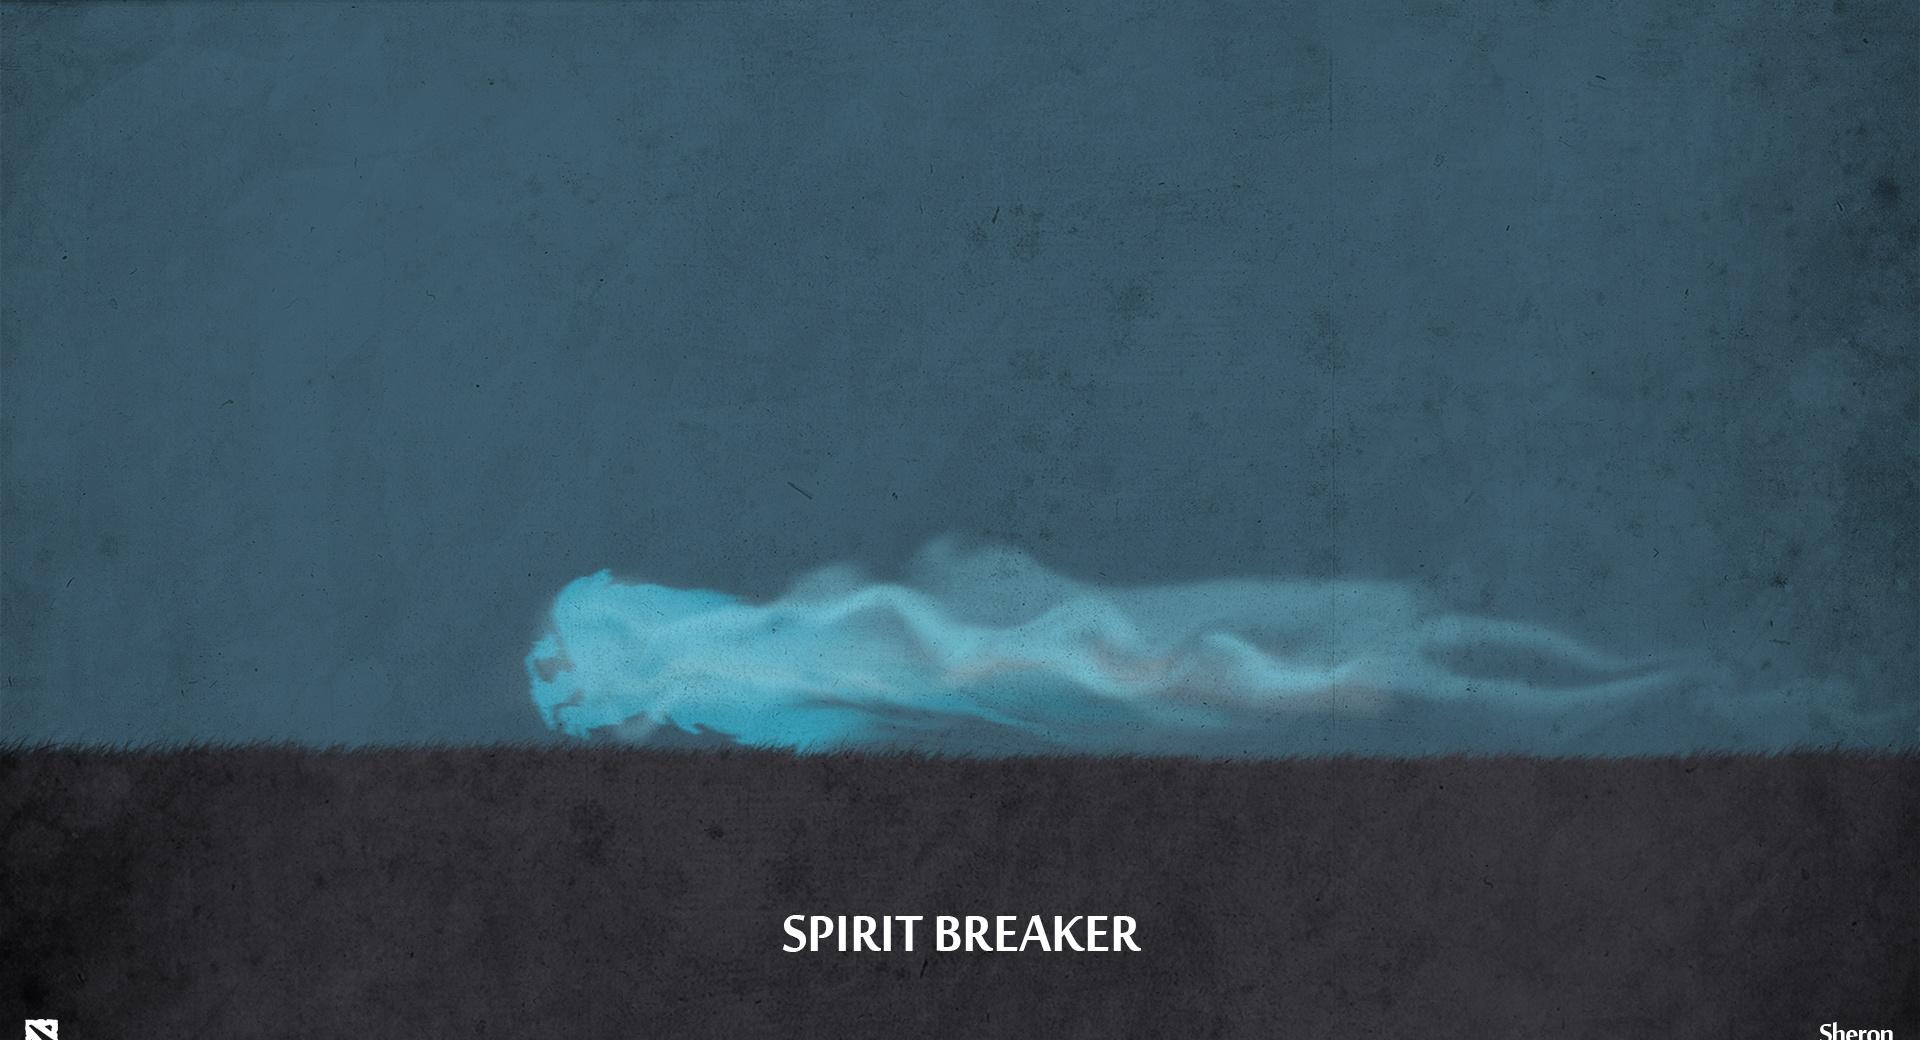 Spirit Breaker - DotA 2 at 1024 x 768 size wallpapers HD quality